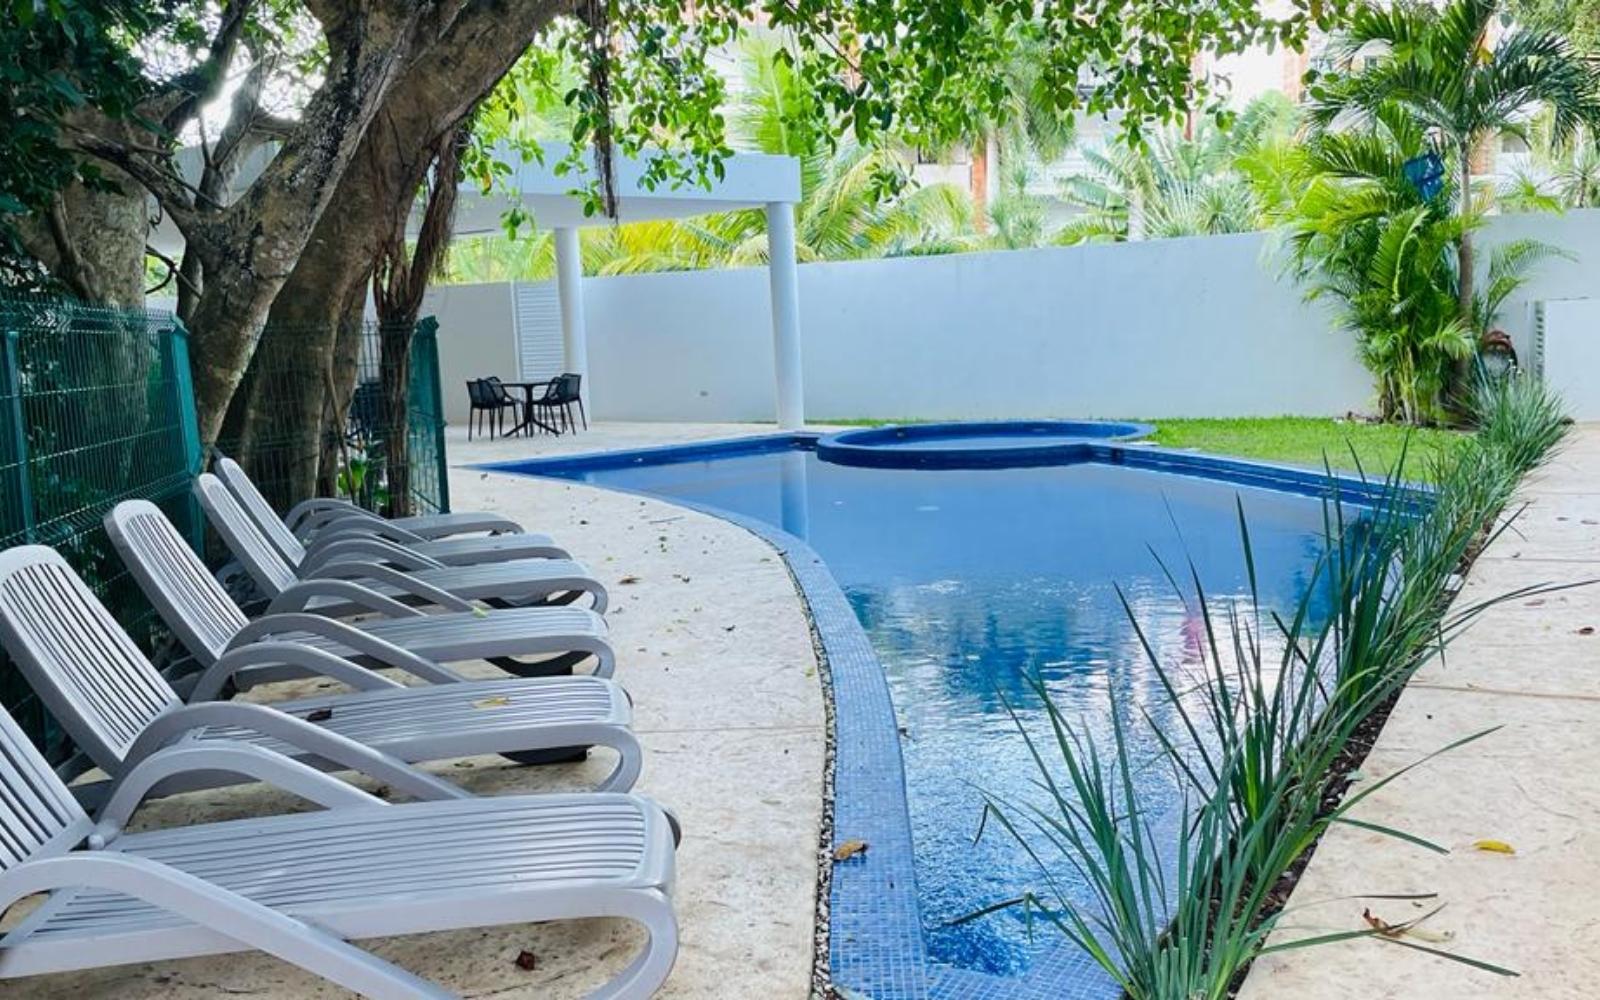 3 bedroom house with private pool at El Tigrillo, Playa del Carmen.